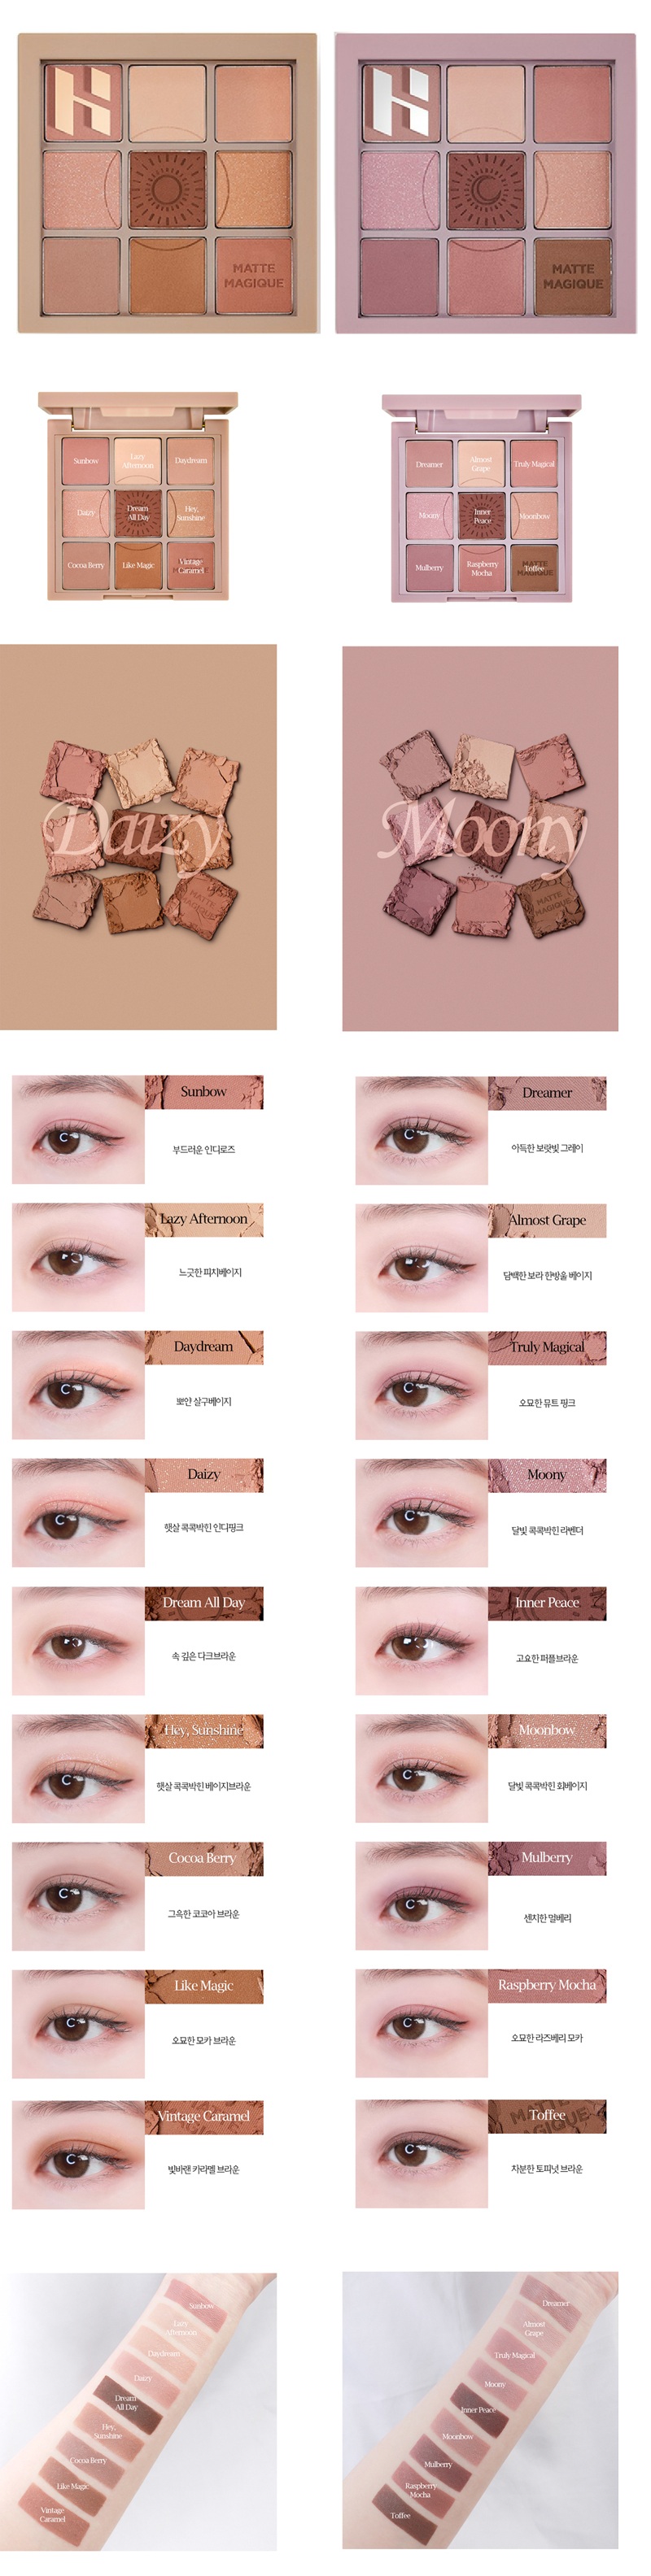 Holika Holika My Fave Mood Eye Palette korean cosmetic makeup product online shop malaysia China indonesia2